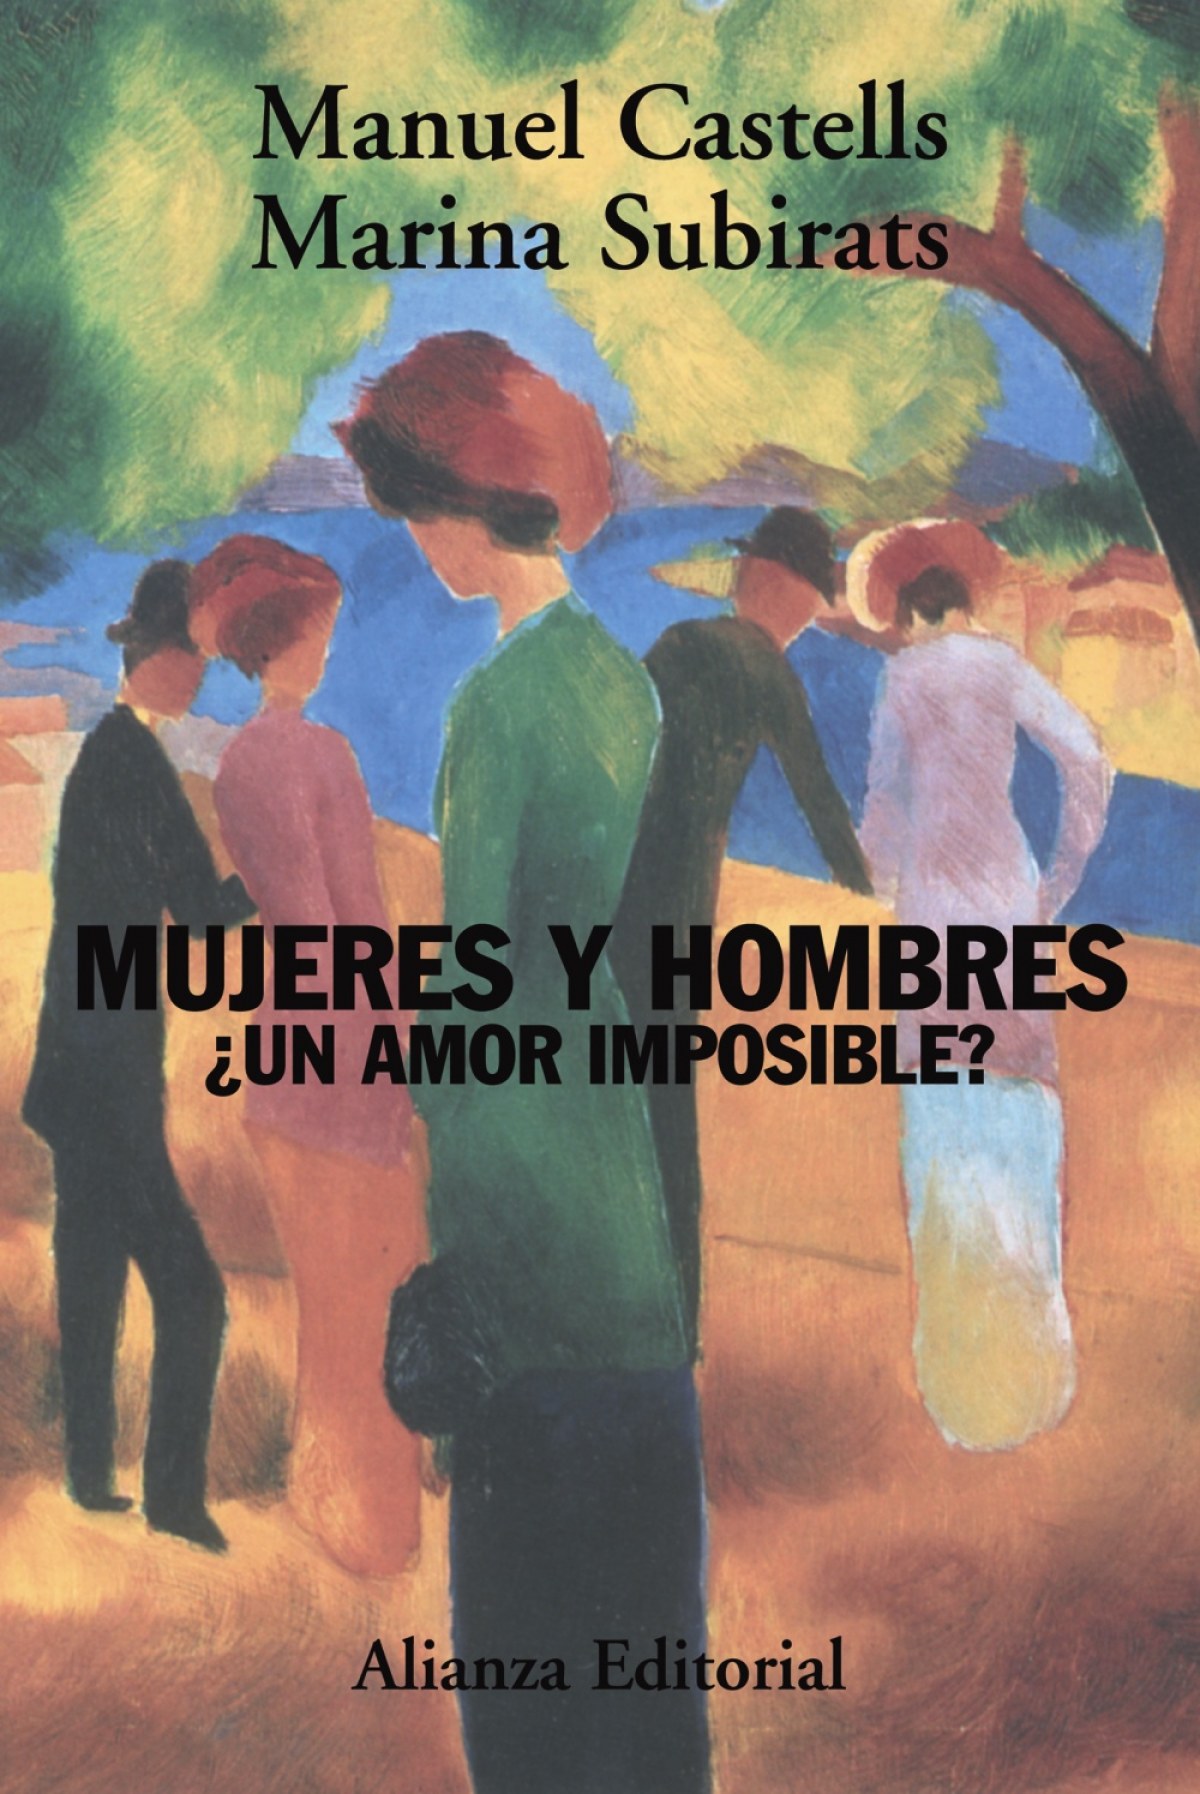 Mujeres y hombres: ¿un amor imposible? - Castells, Manuel/Subirats, Marina